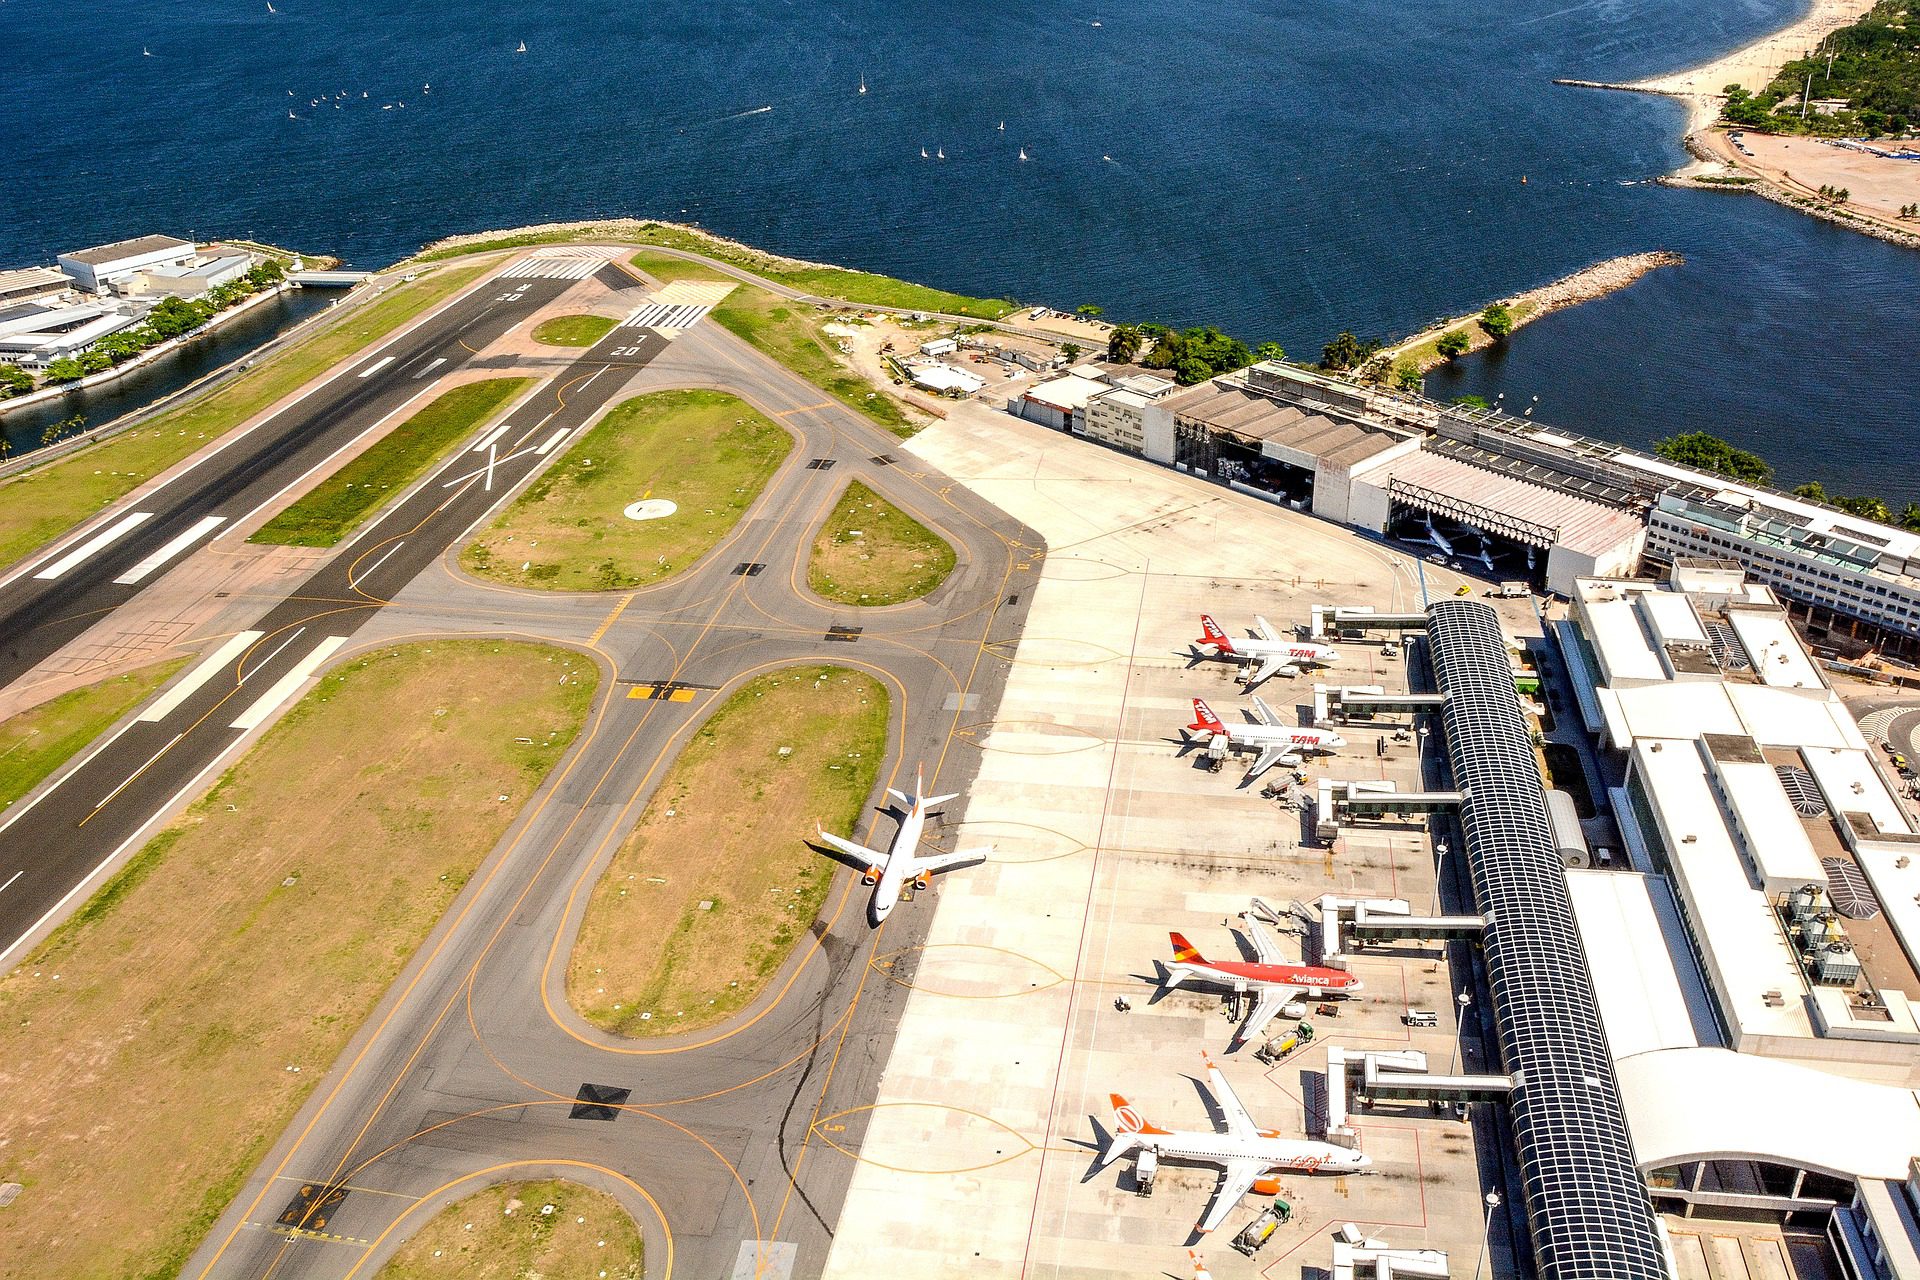 Airport runways in Brazil